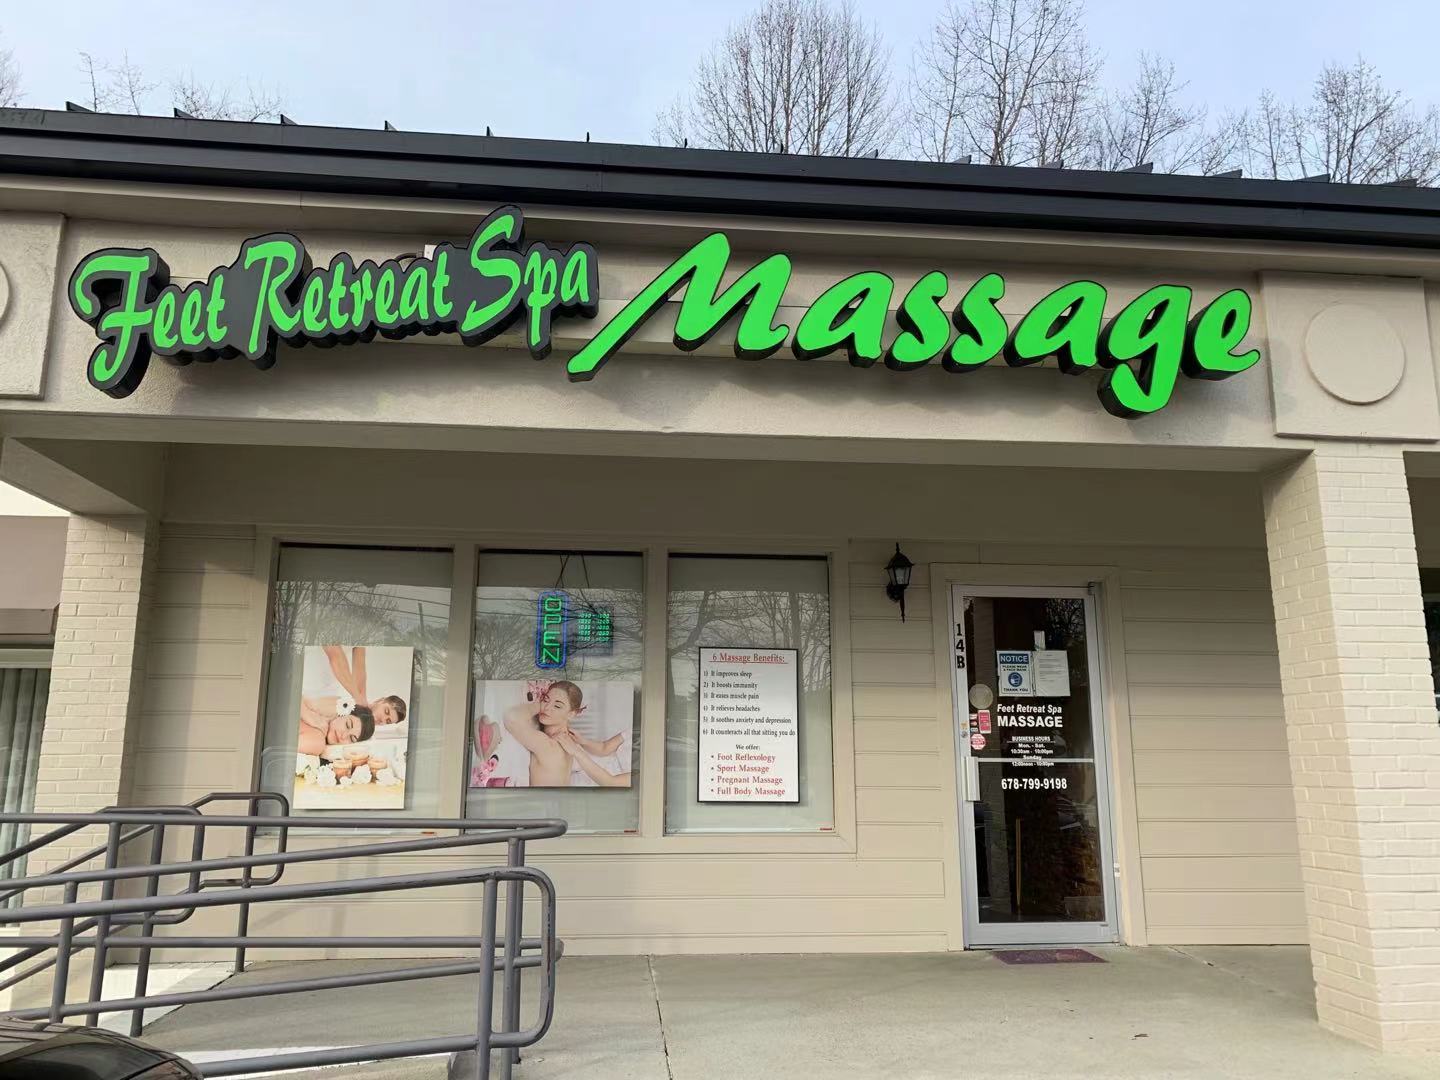 Feet Retreat Spa Massage